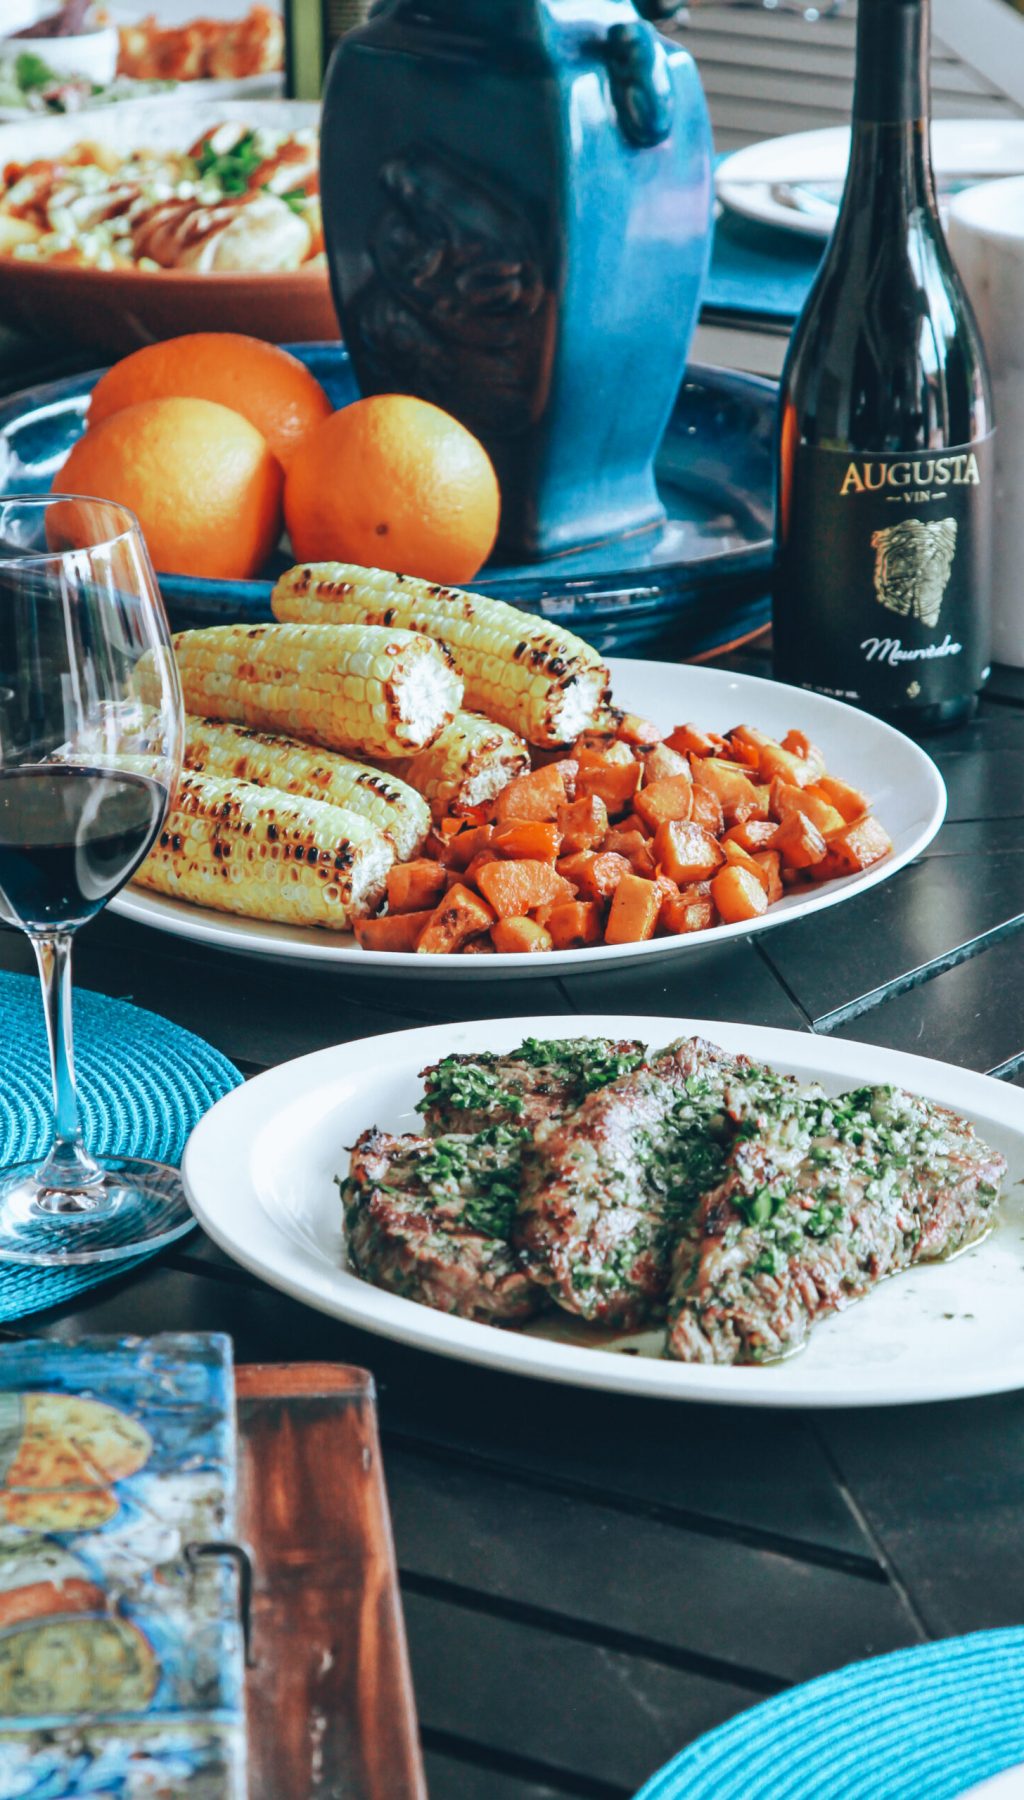 Augusta Vin Winery, recipes, summer, steak, chimichurri, sweet potatoes, corn, red wine